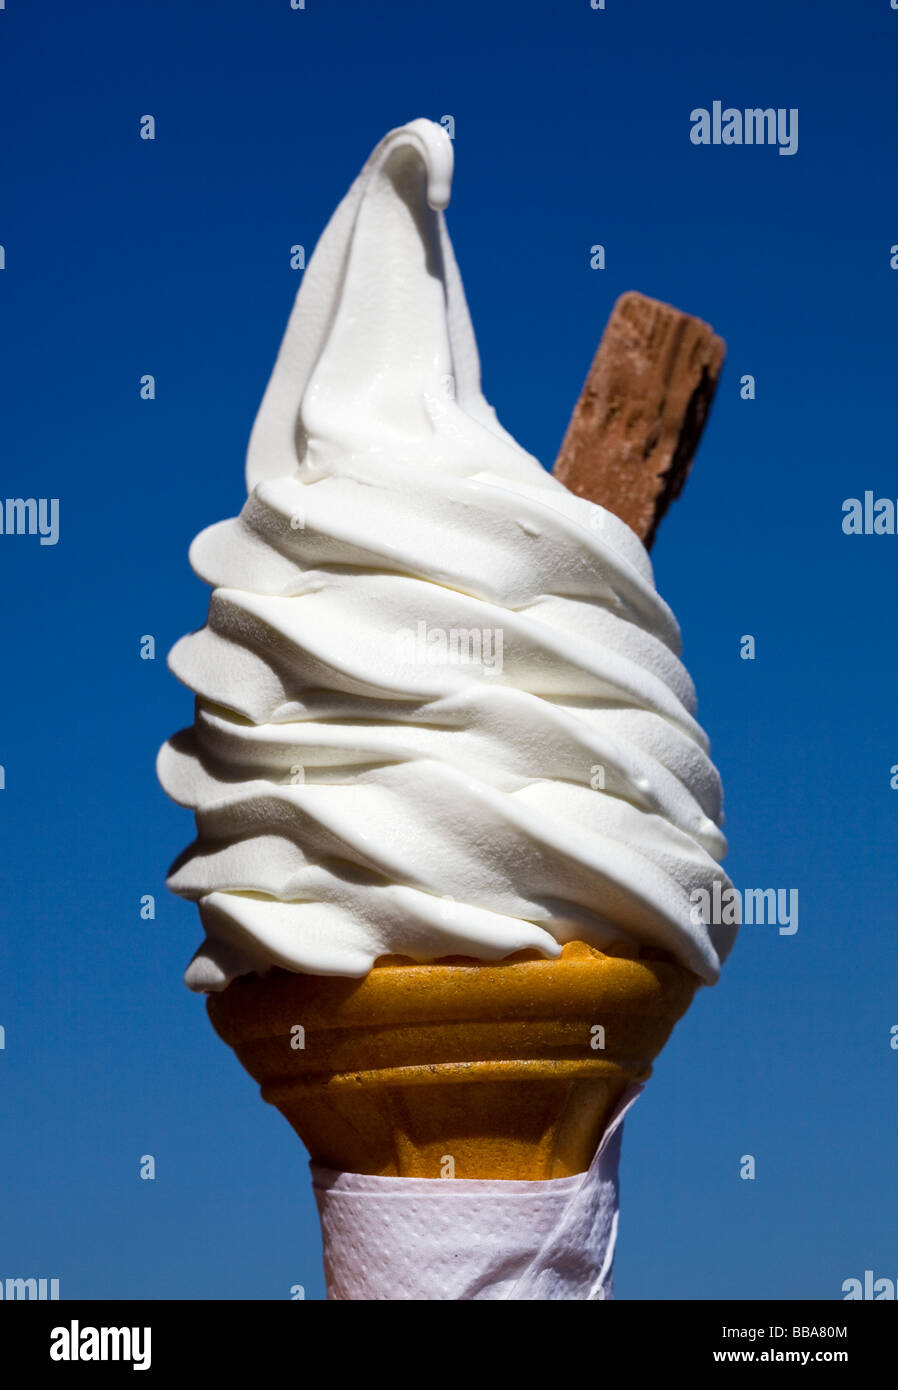 Ice Cream cone with chocolate flake or 99 Stock Photo